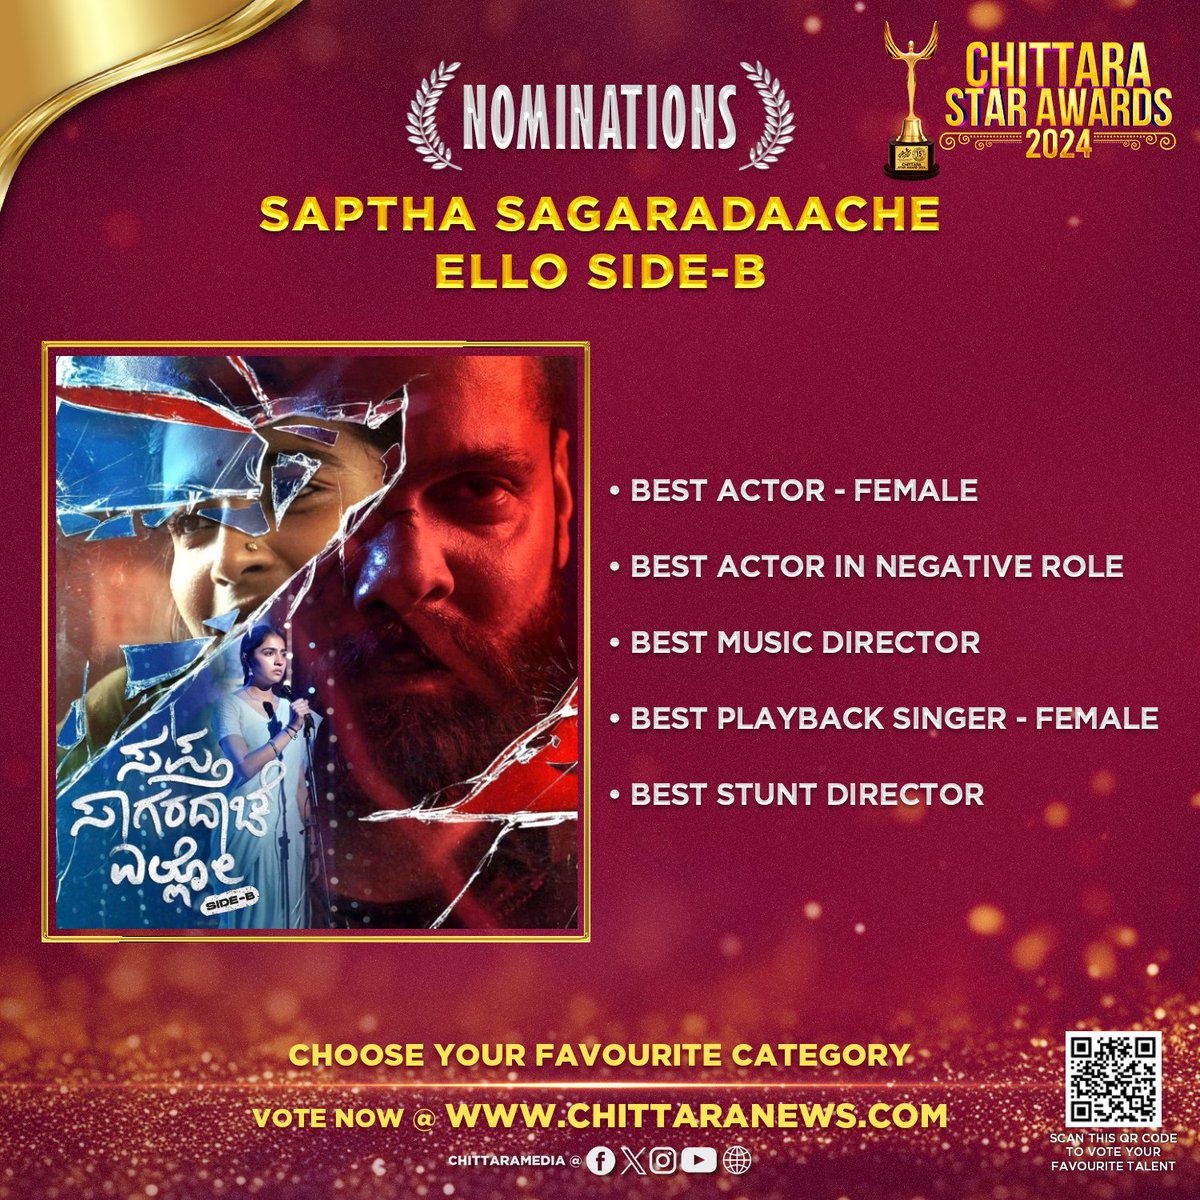 #SapthaSagaradaacheElloSideB 05 Nominations at #ChittaraStarAwards2024 ! Global Voting is Now Live : awards.chittaranews.com/poll/780/ Vote now and show your love for Team #SapthaSagaradaacheElloSideB #ChittaraStarAwards2024 #CSA2024 #ChittaraStarAwards